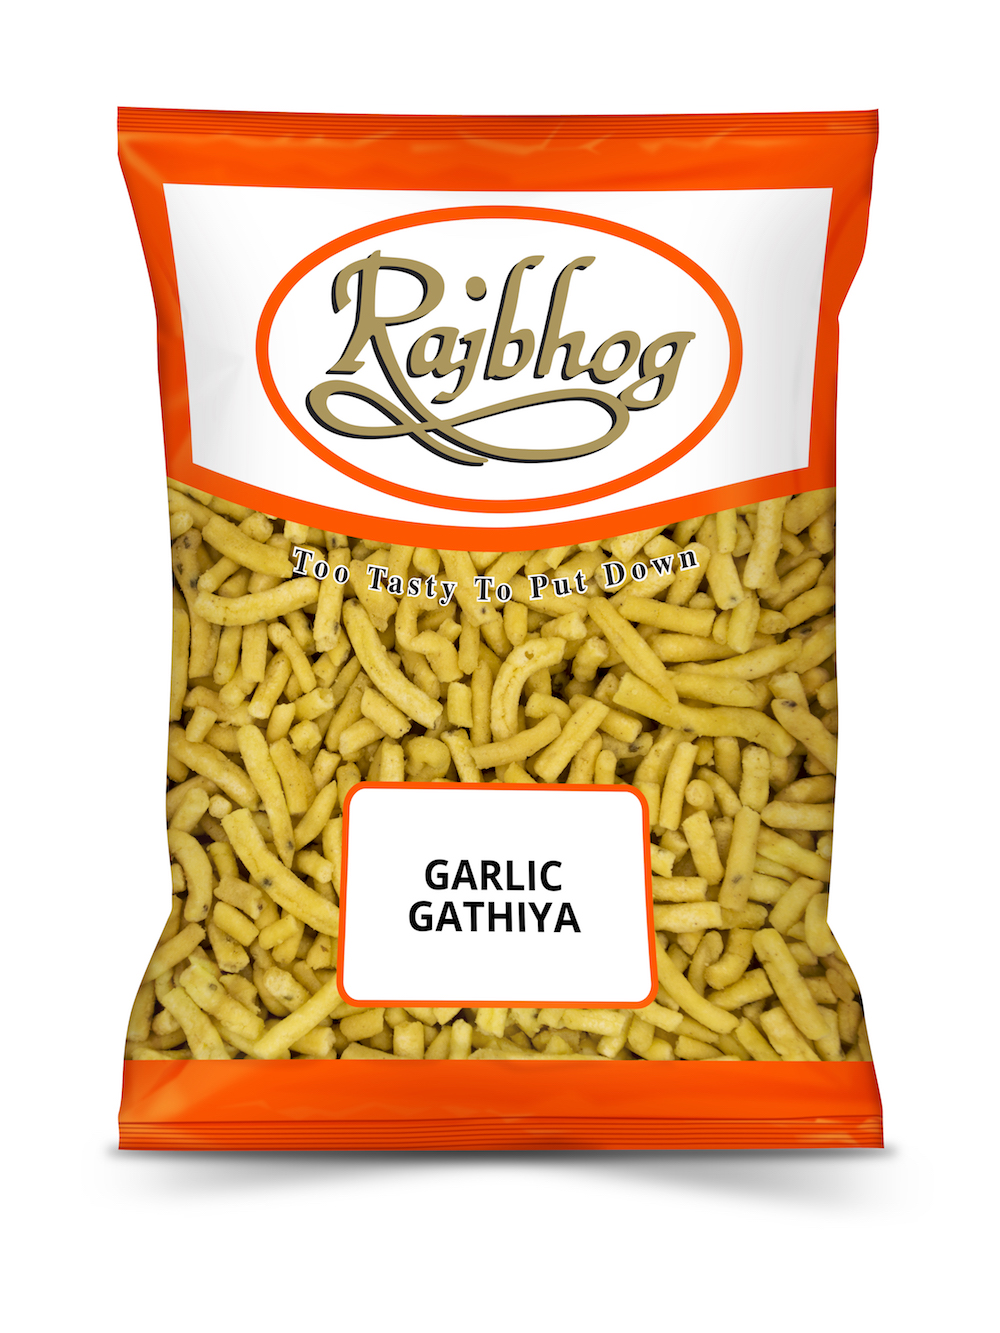 Garlic Gathiya